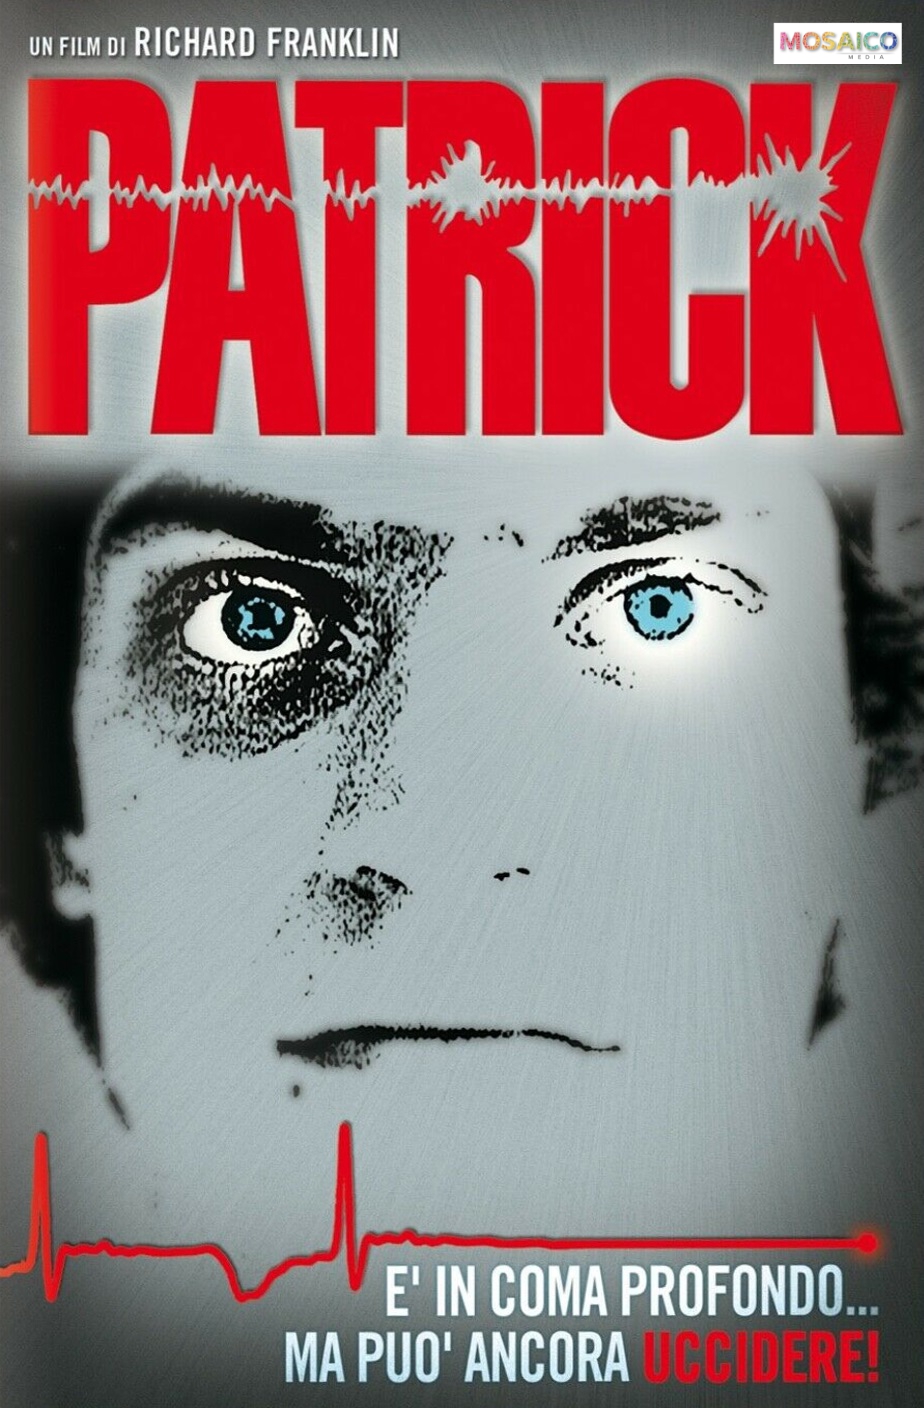 Patrick [HD] (1978)